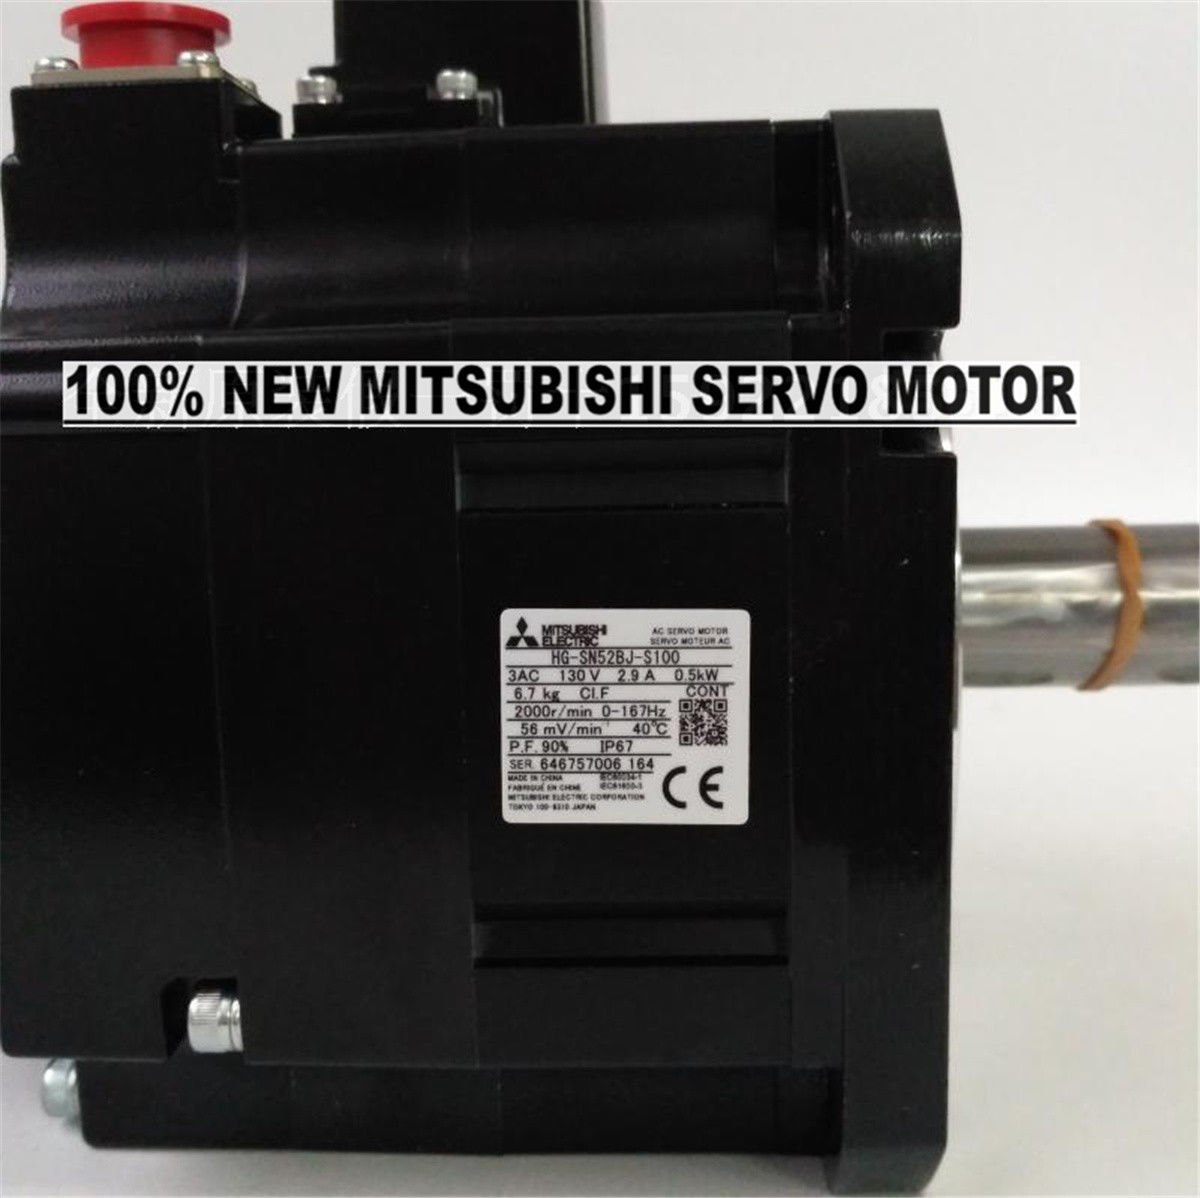 Brand NEW Mitsubishi Servo Motor HG-SN52BJ-S100 in box HGSN52BJS100 - Click Image to Close